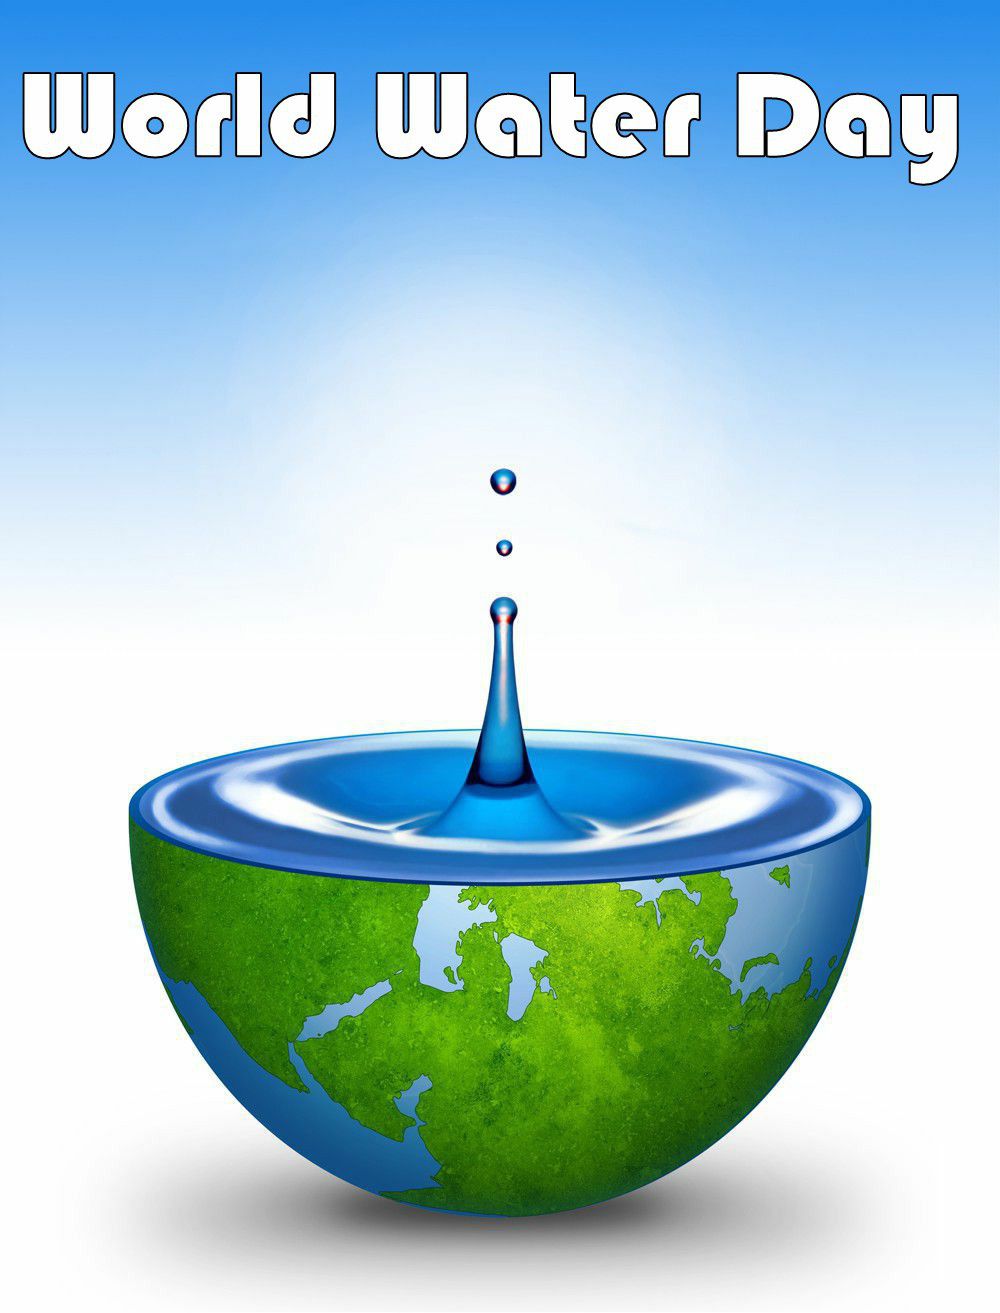 34+] World Water Day Wallpapers - WallpaperSafari